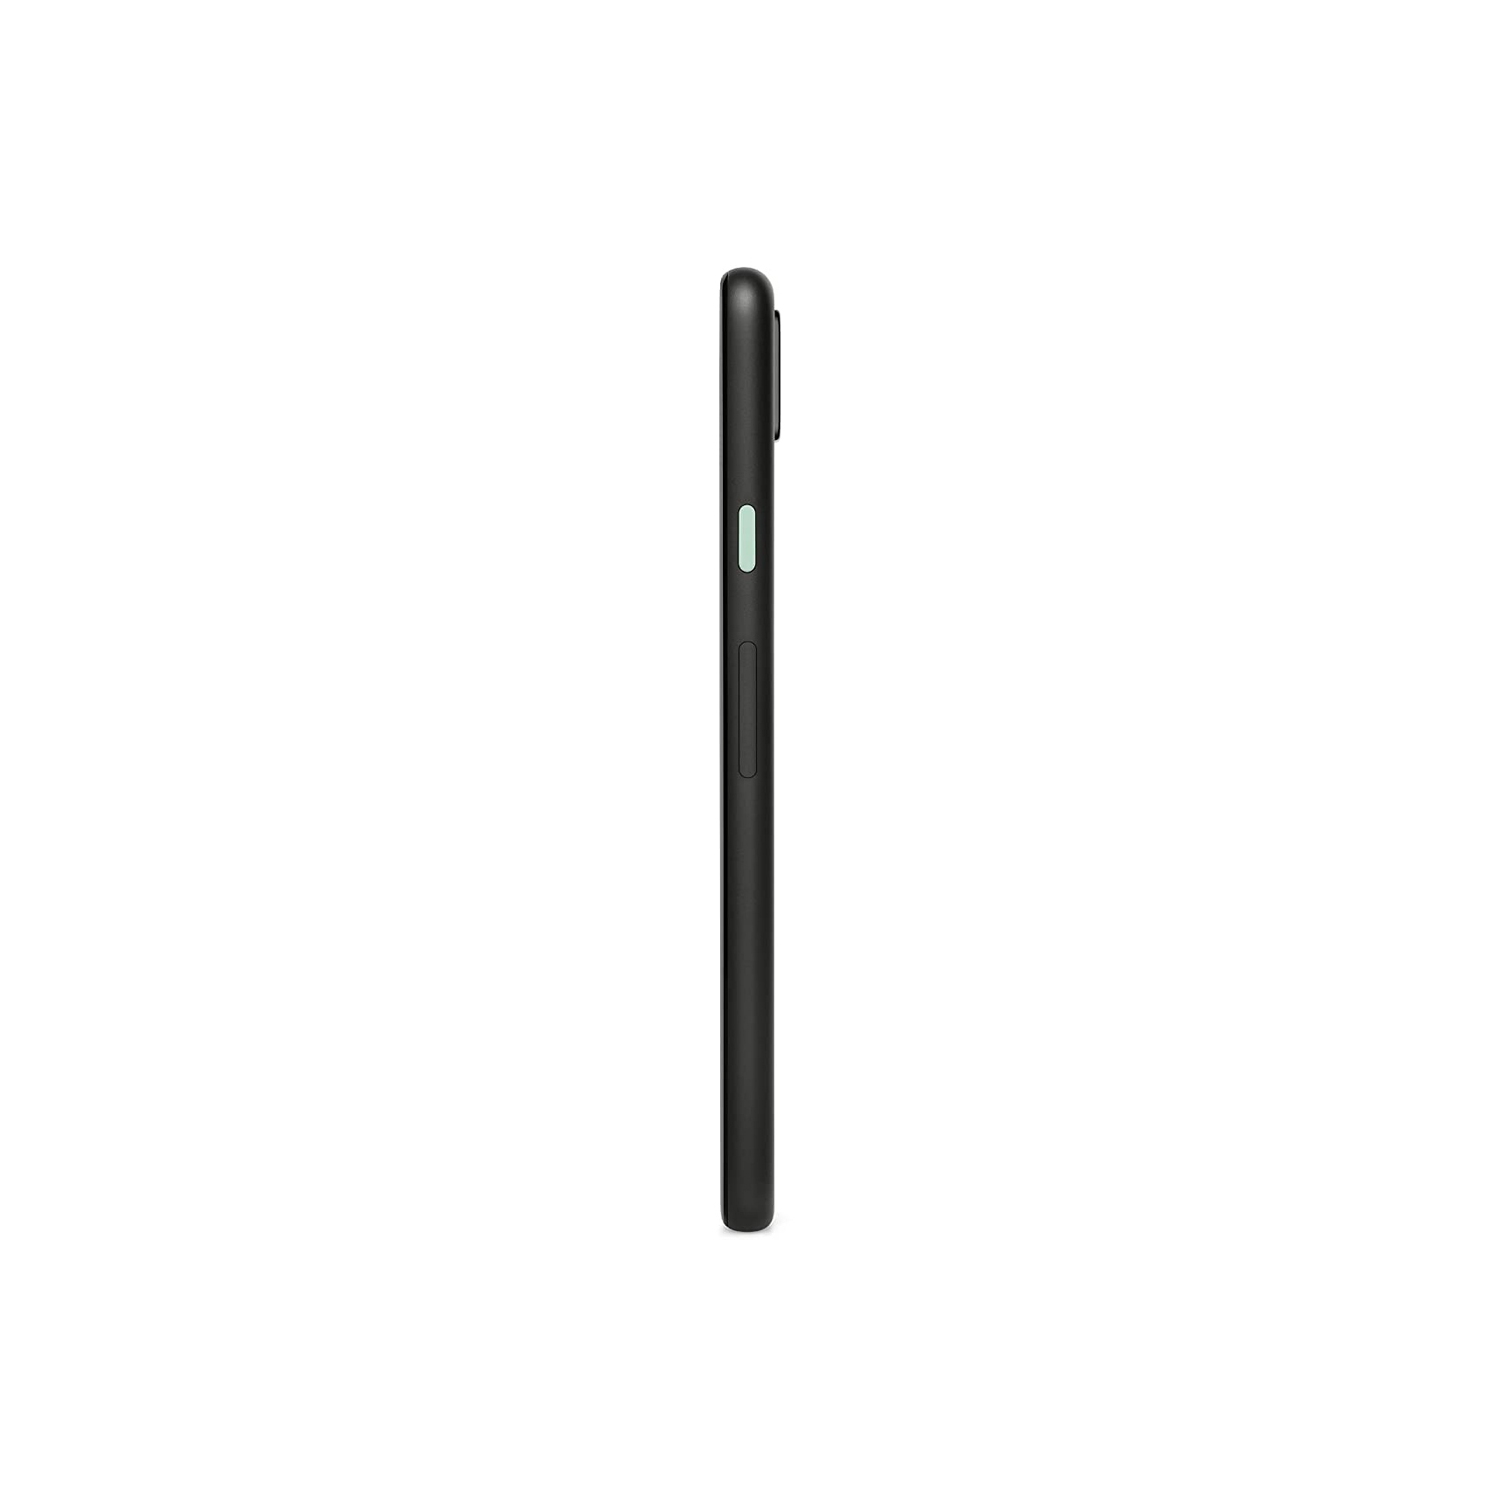 Smartphone Google Pixel 4a 128GB Unlocked - Black | Best Buy Canada